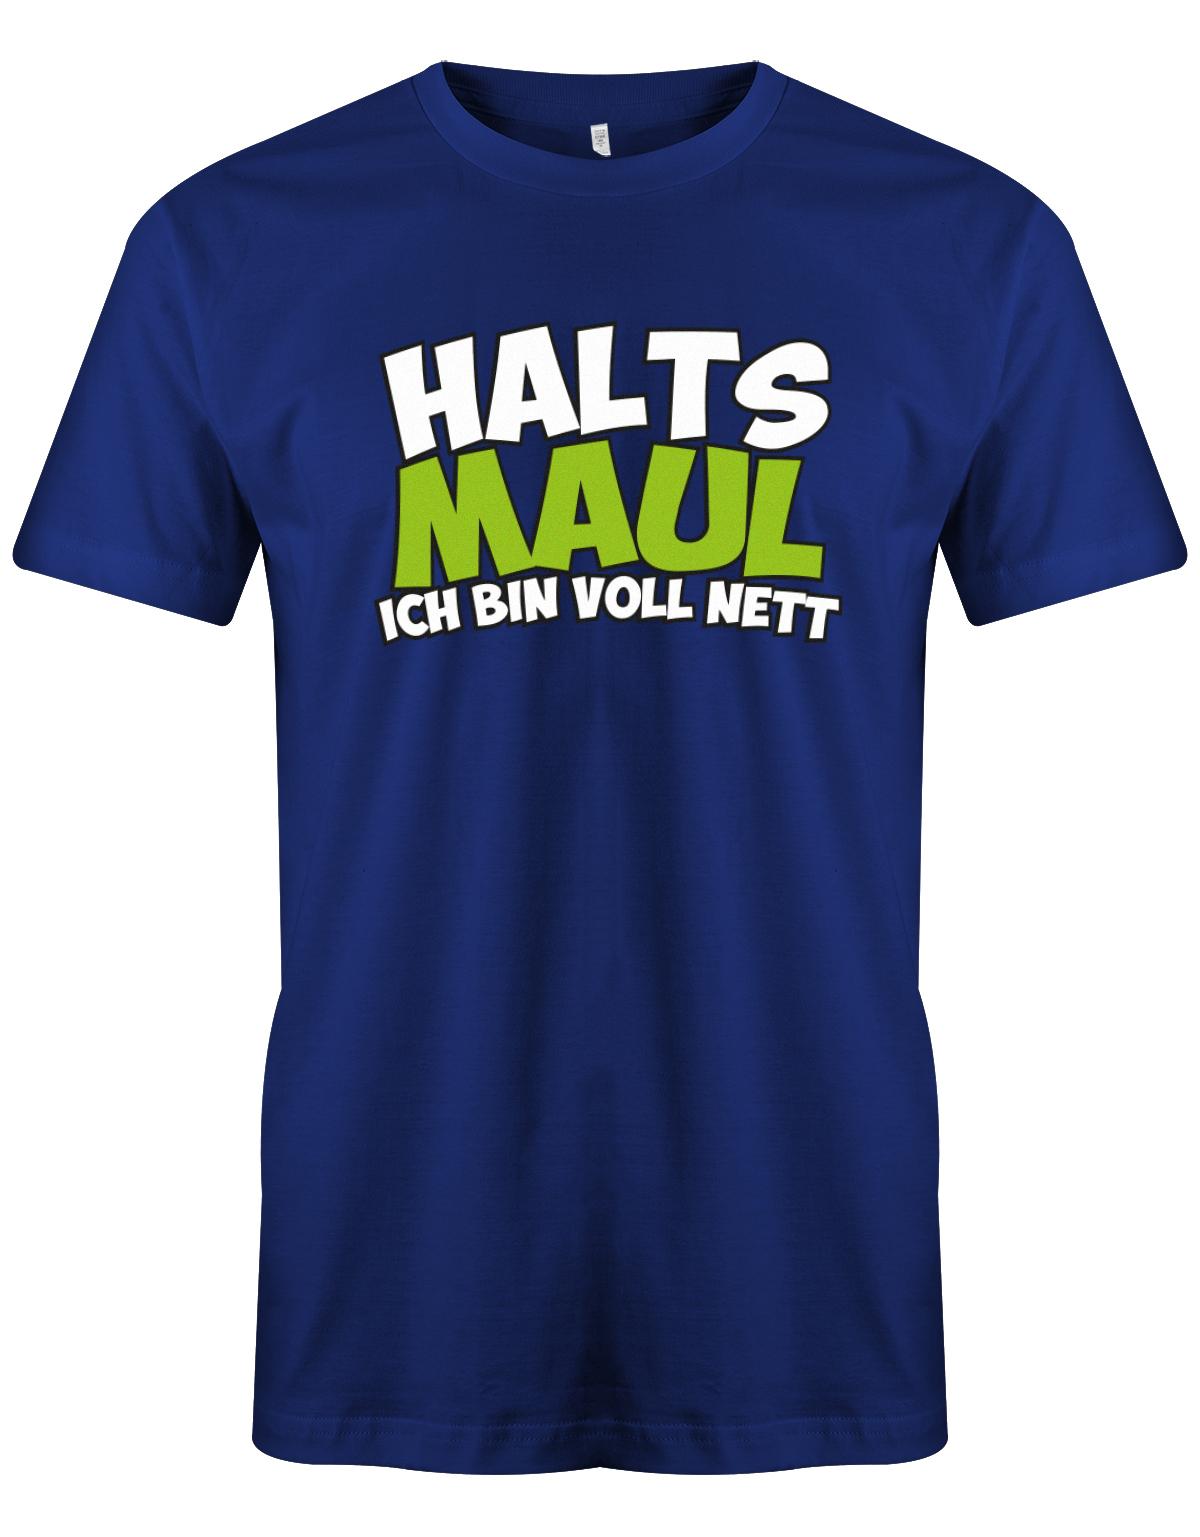 Halts-Maul-ich-bin-voll-nett-Herren-Shirt-Royalblau